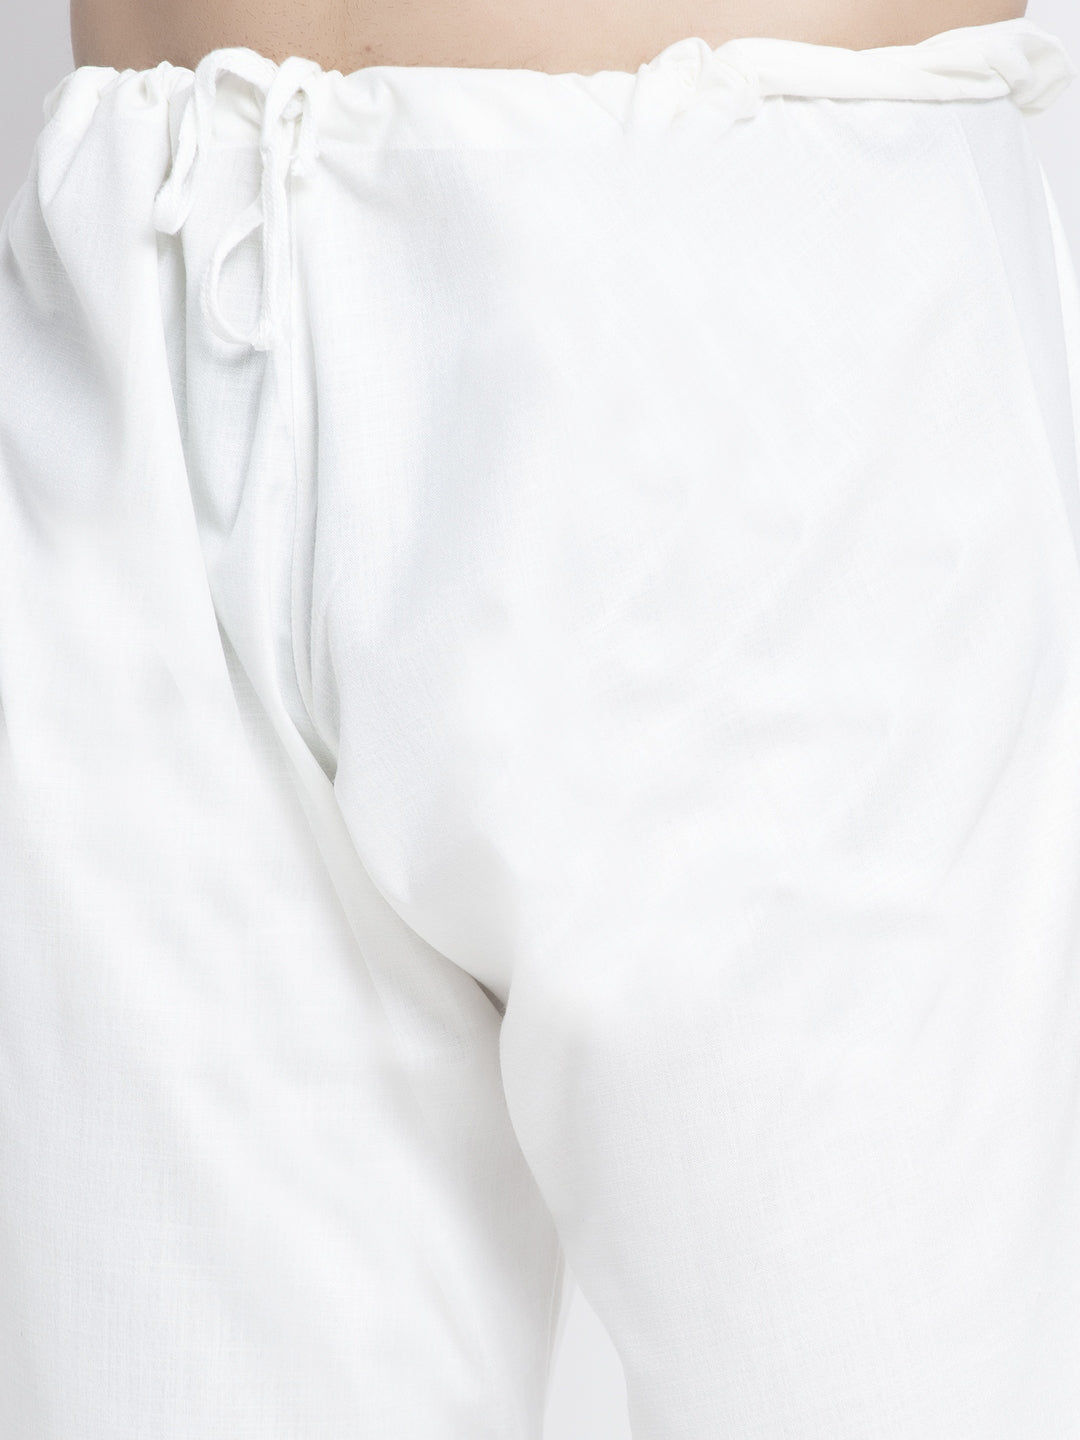 Men's Solid White Cotton Kurta Payjama with Geometric Waistcoat ( JOKPWC OW-F 4022 Blue ) - Virat Fashions